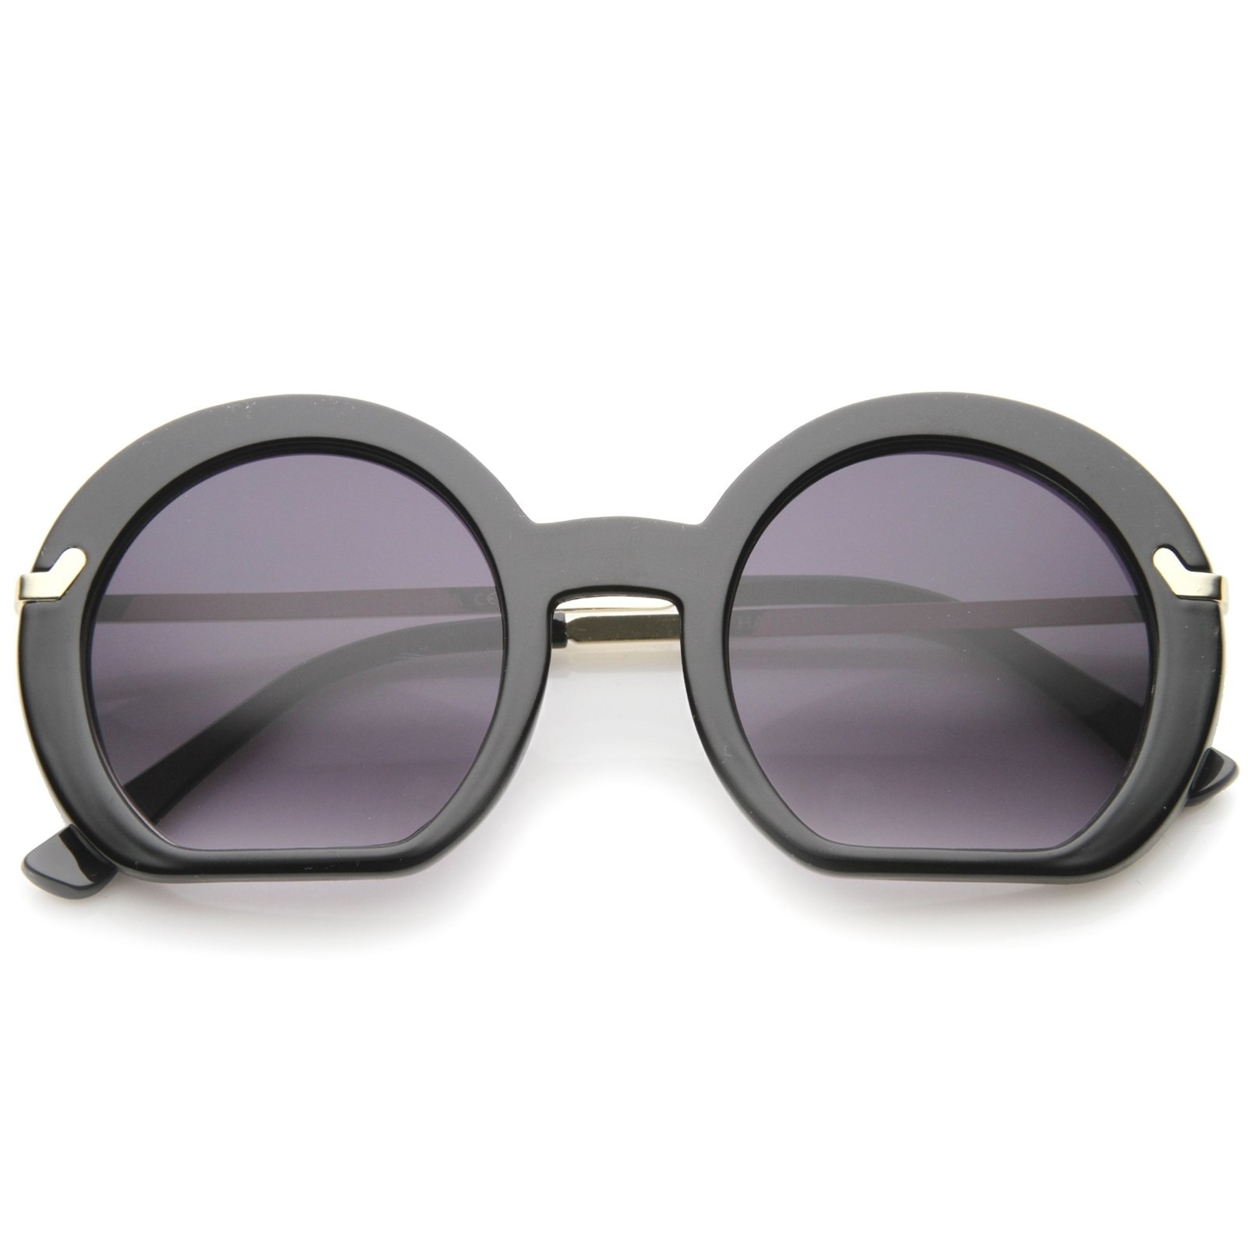 Women's High Fashion Flat Bottom Oversize Round Sunglasses 50mm - Black / Lavender